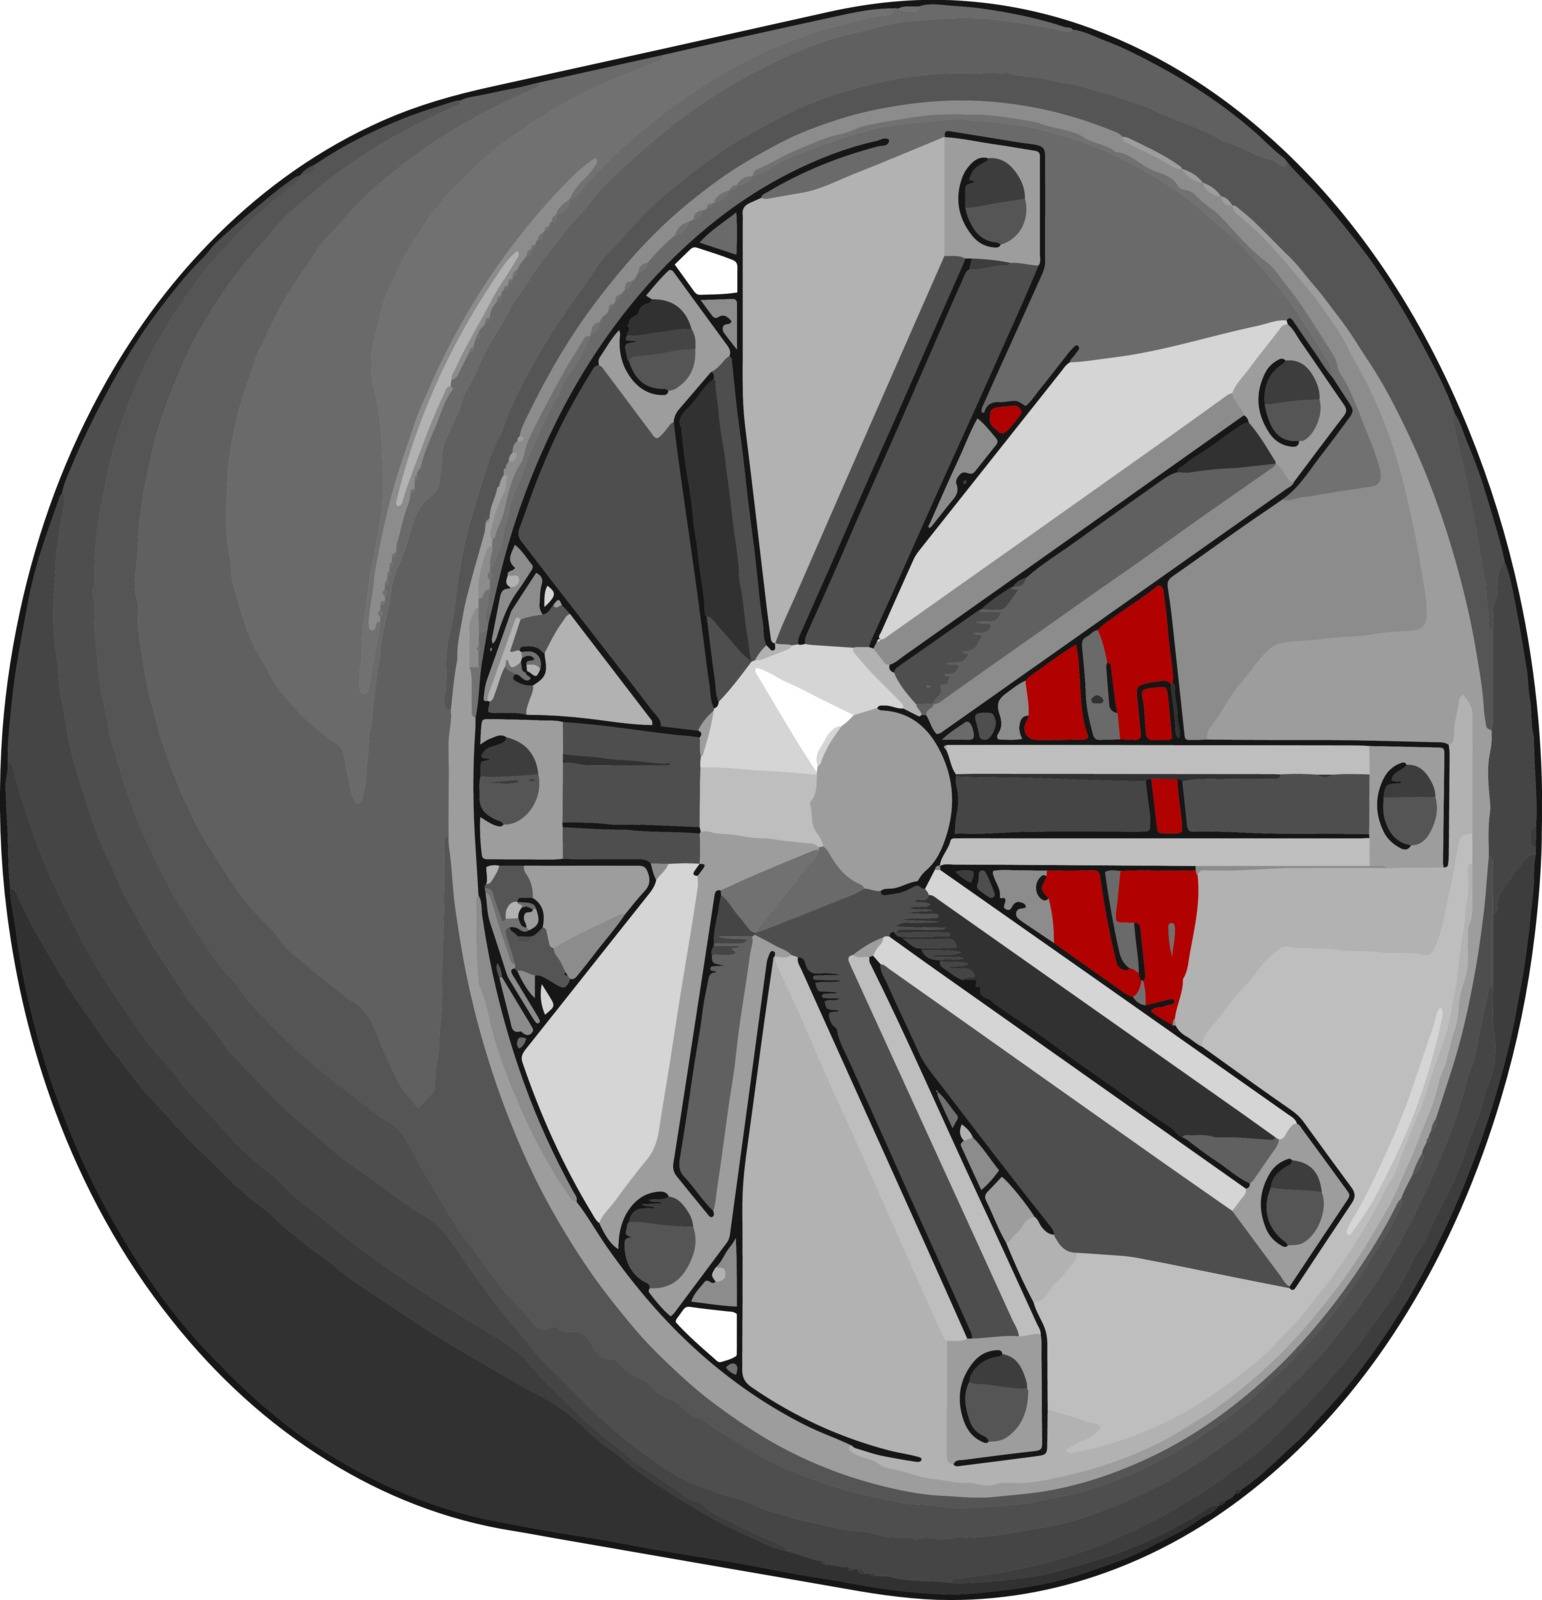 Car tire, illustration, vector on white background. by Morphart